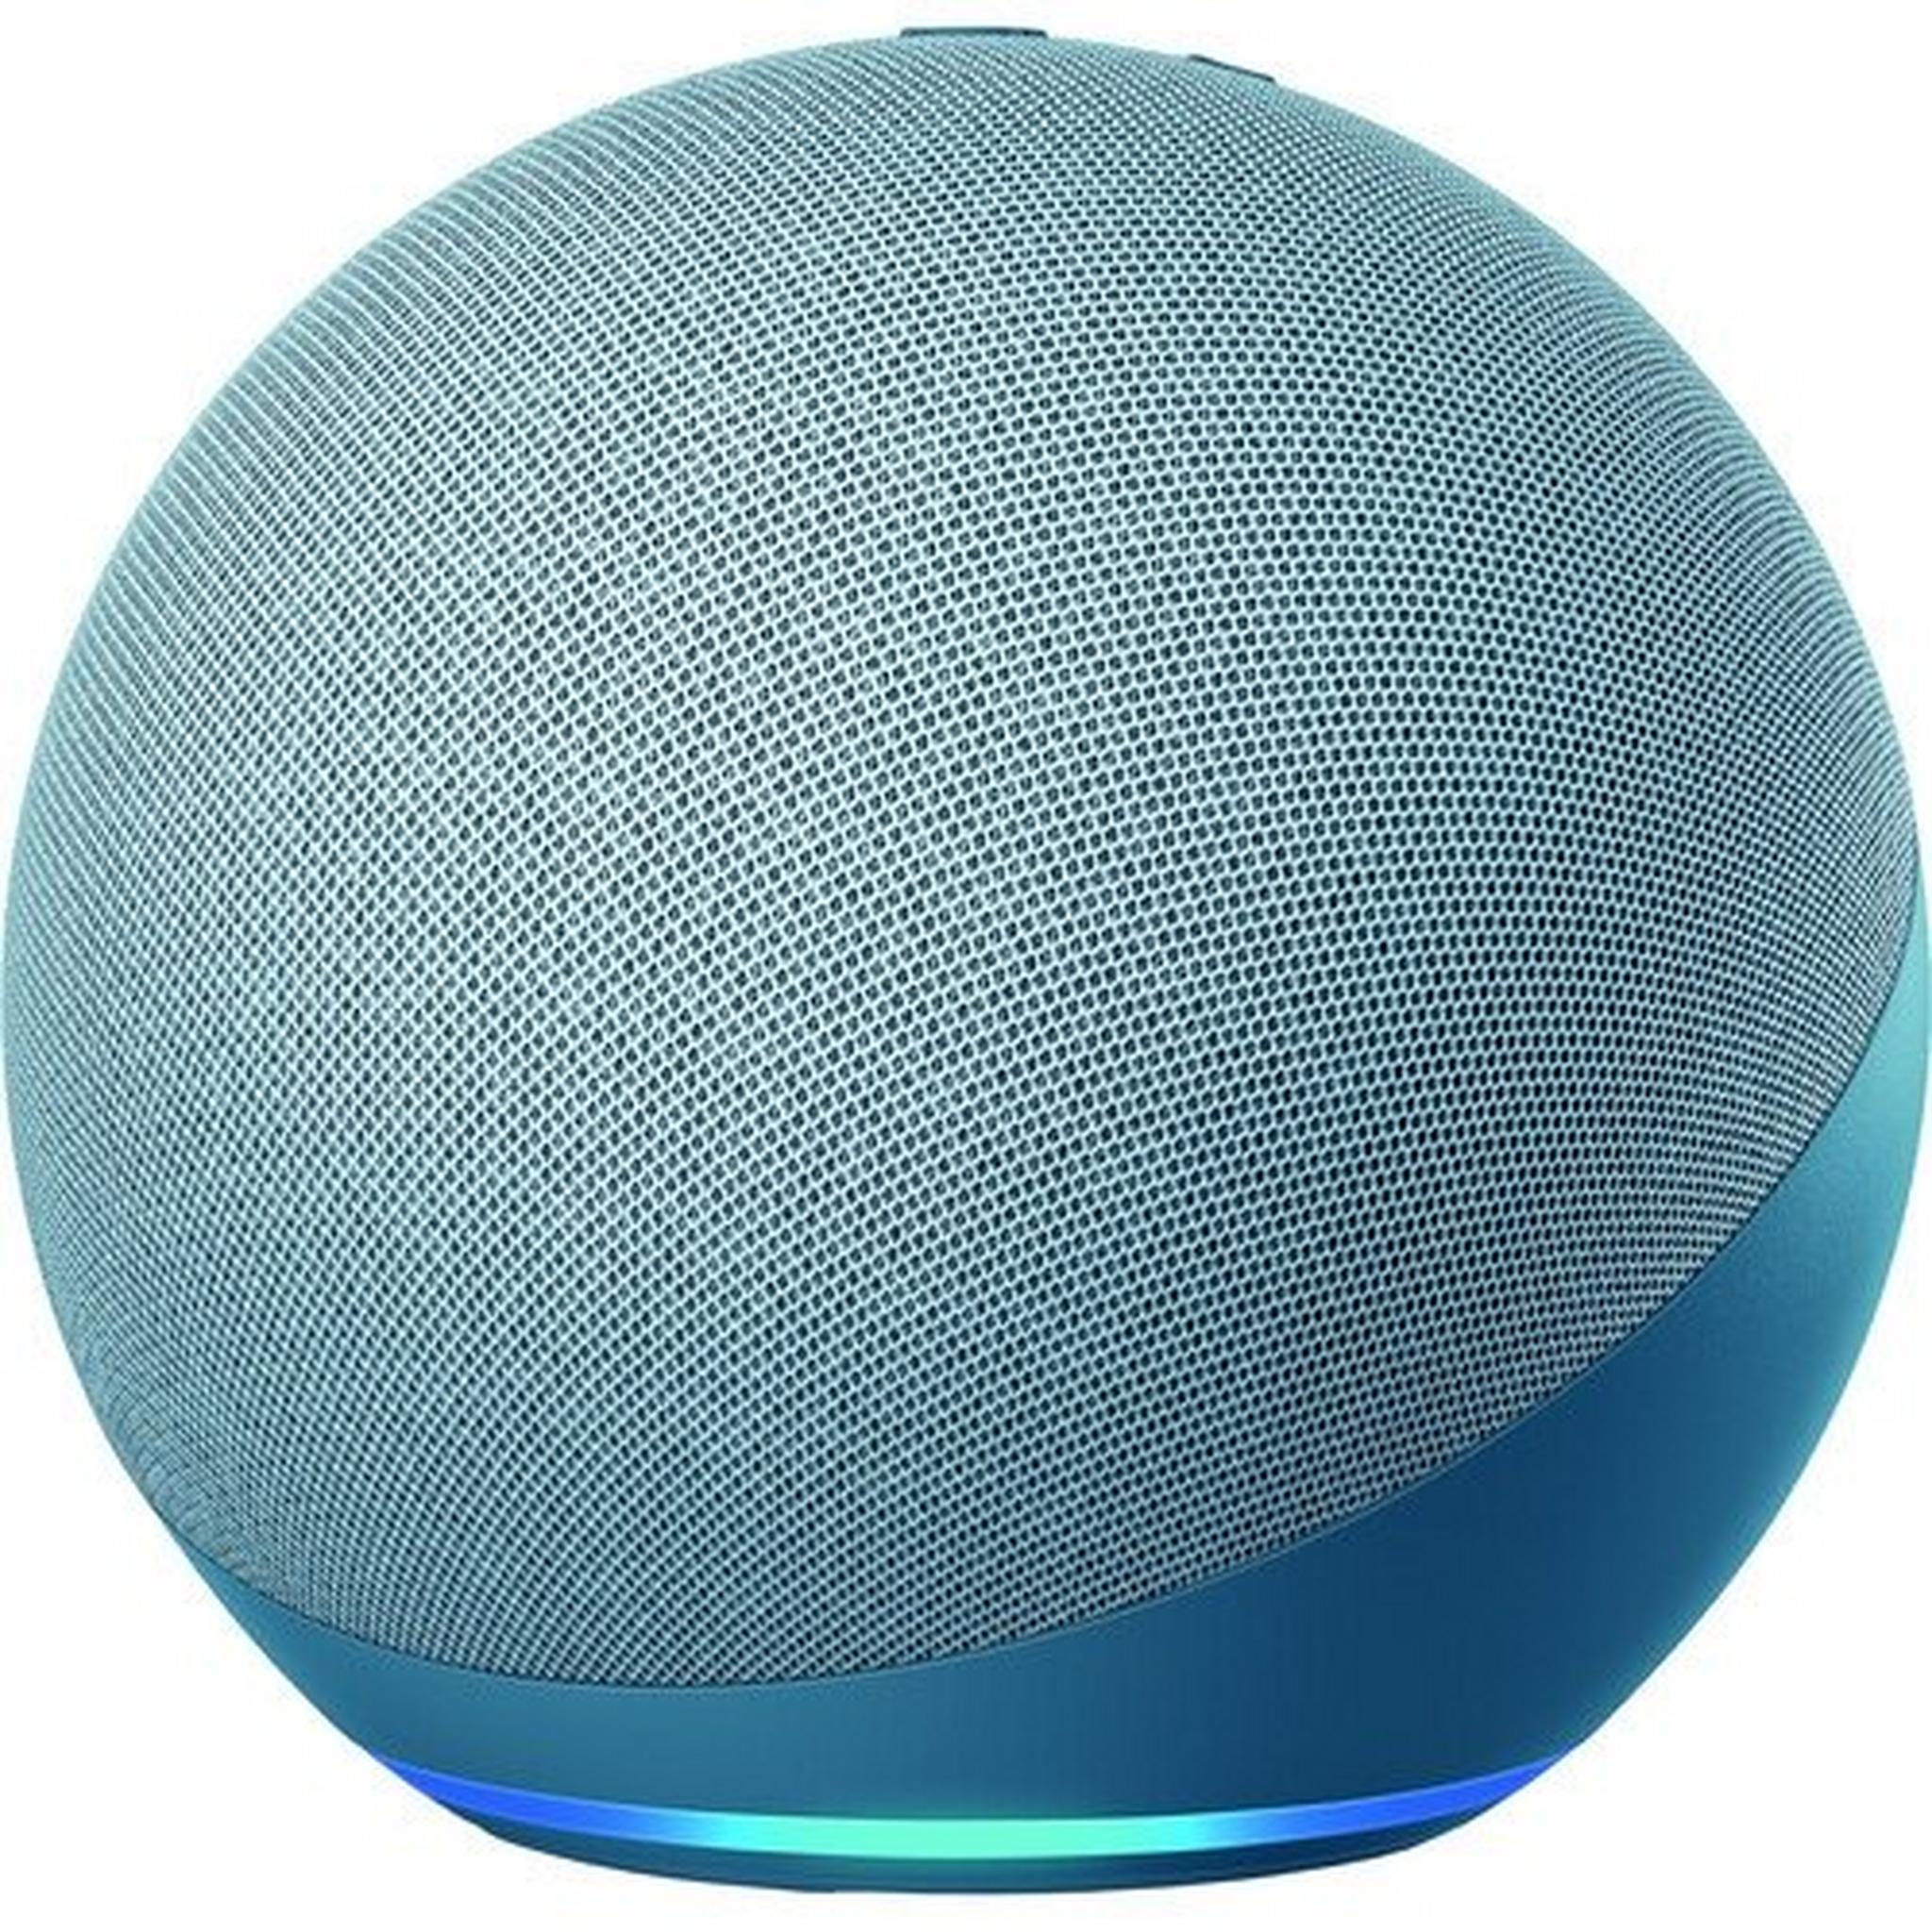 Amazon Echo Dot Smart Speaker (4th Generation) - Twilight Blue